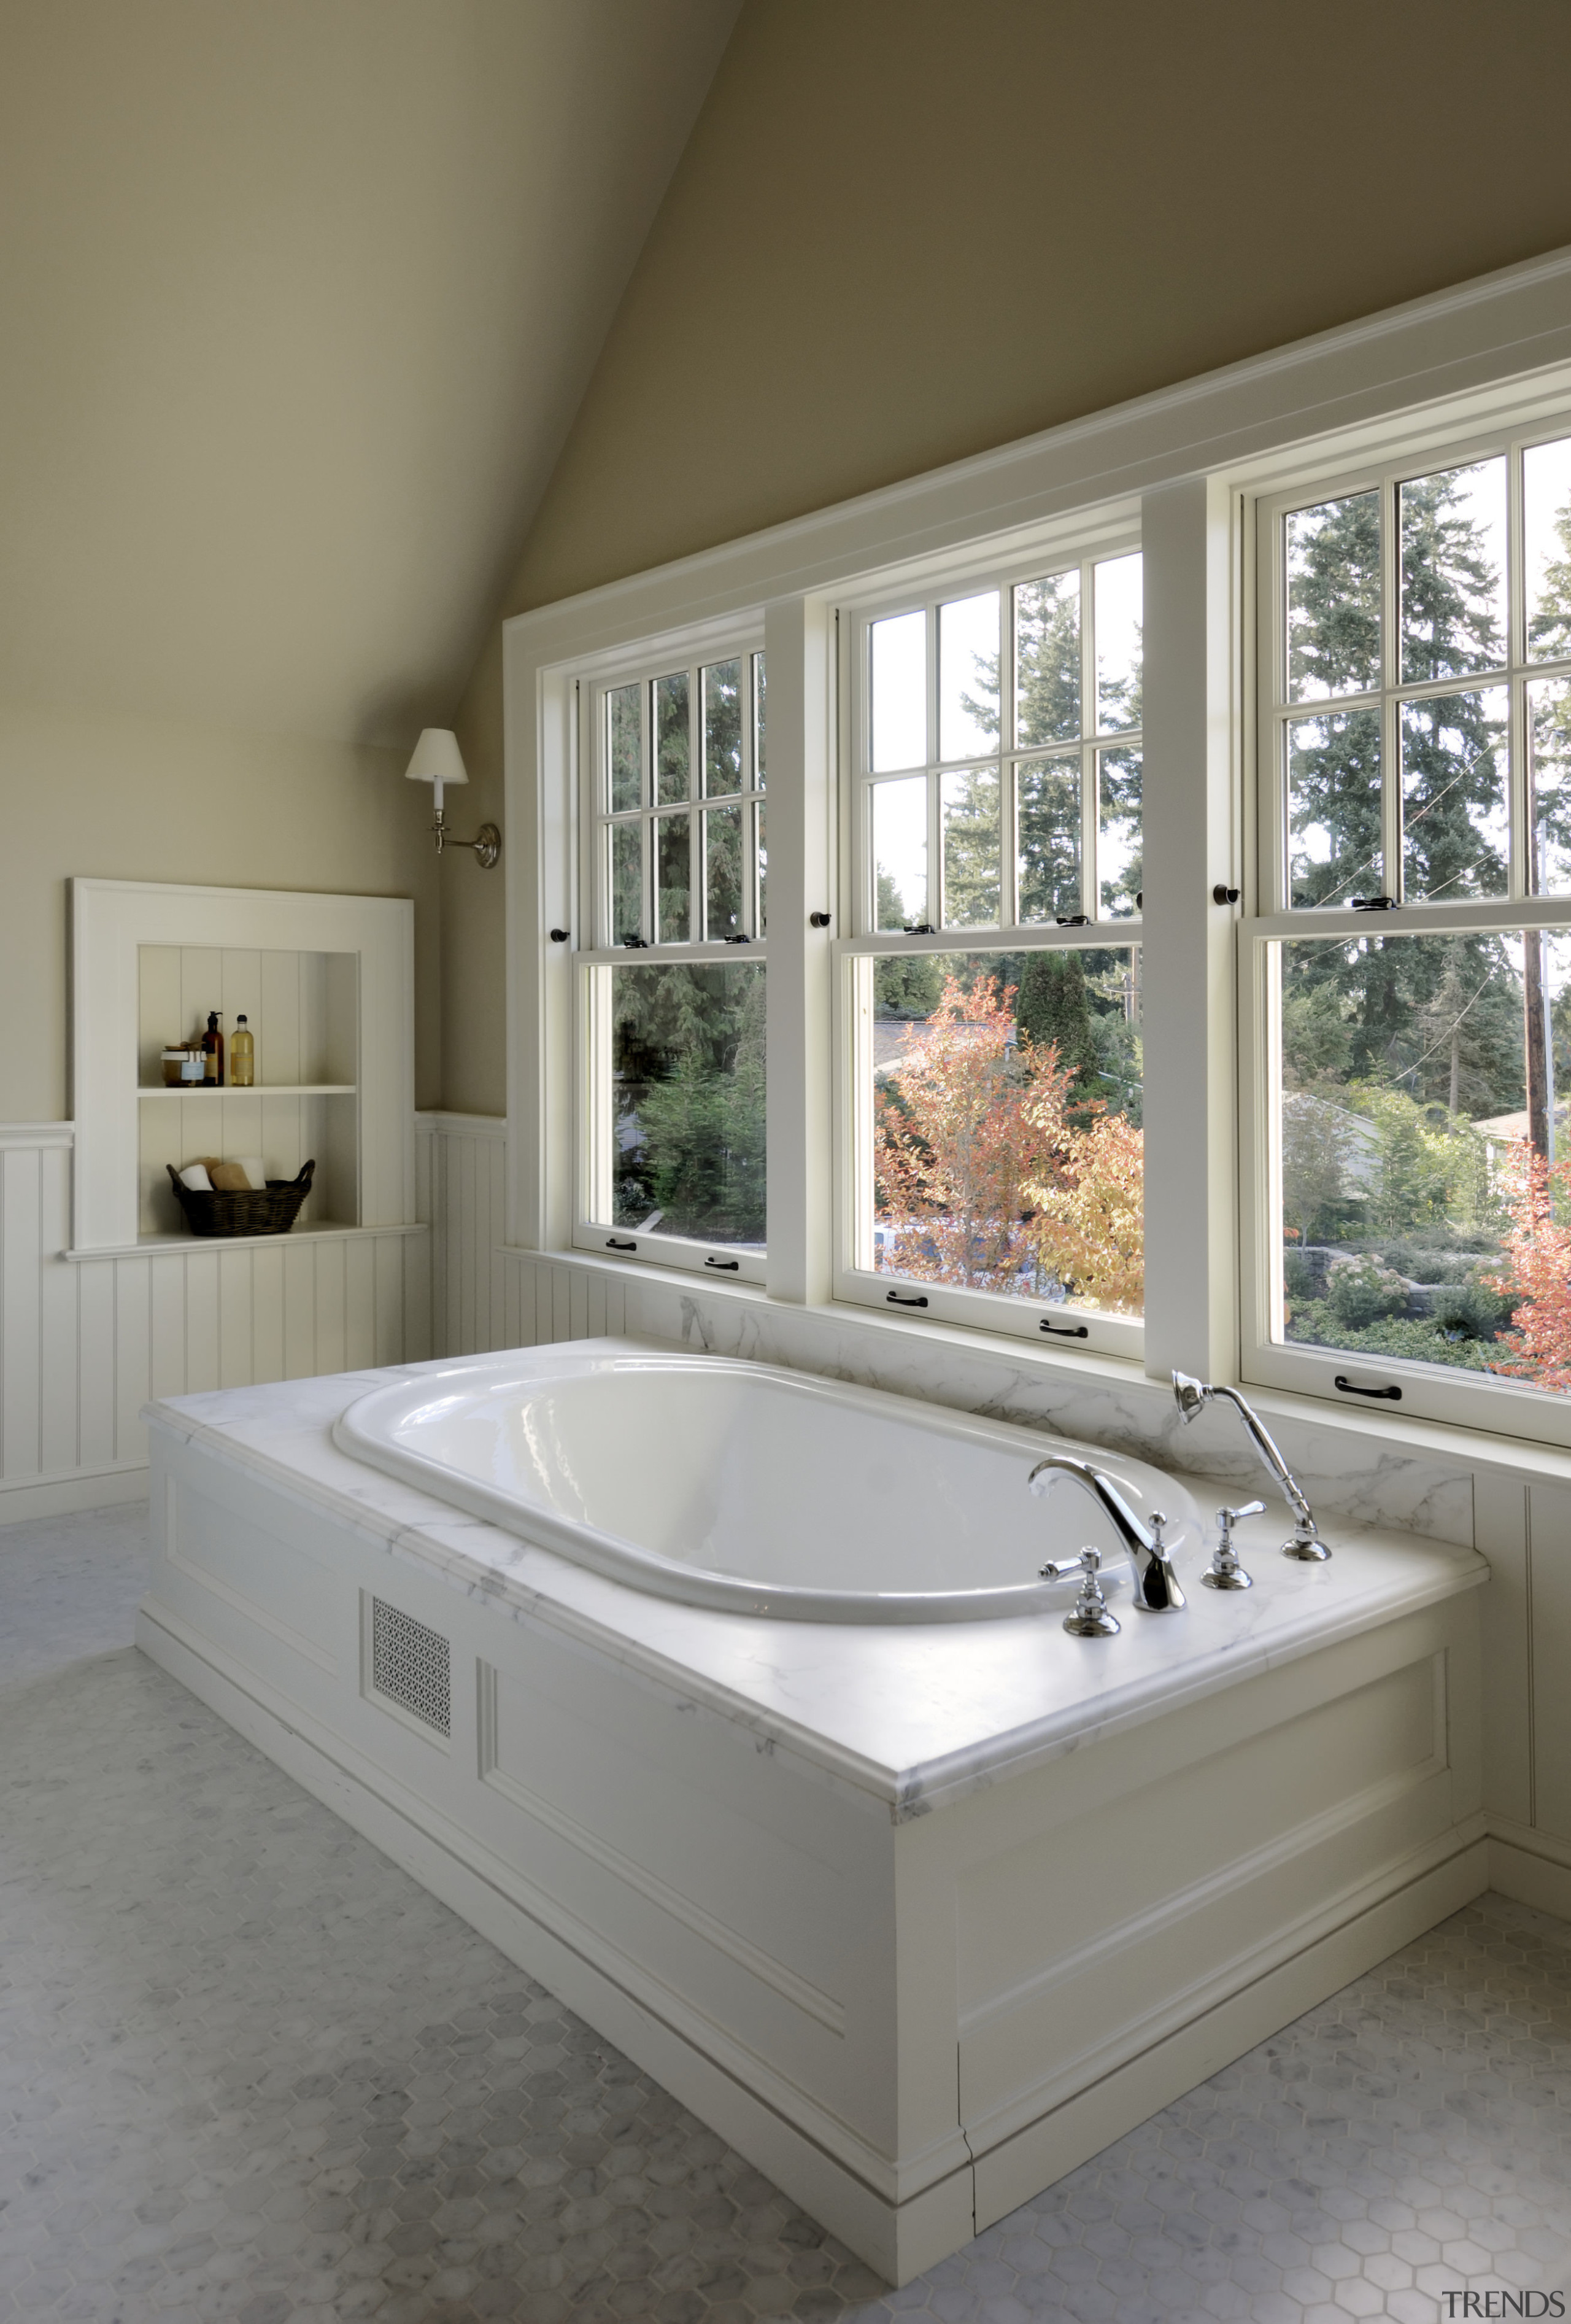 Image of the Bathroom, featuring a white bathtub bathroom, bathtub, home, interior design, plumbing fixture, sink, window, gray